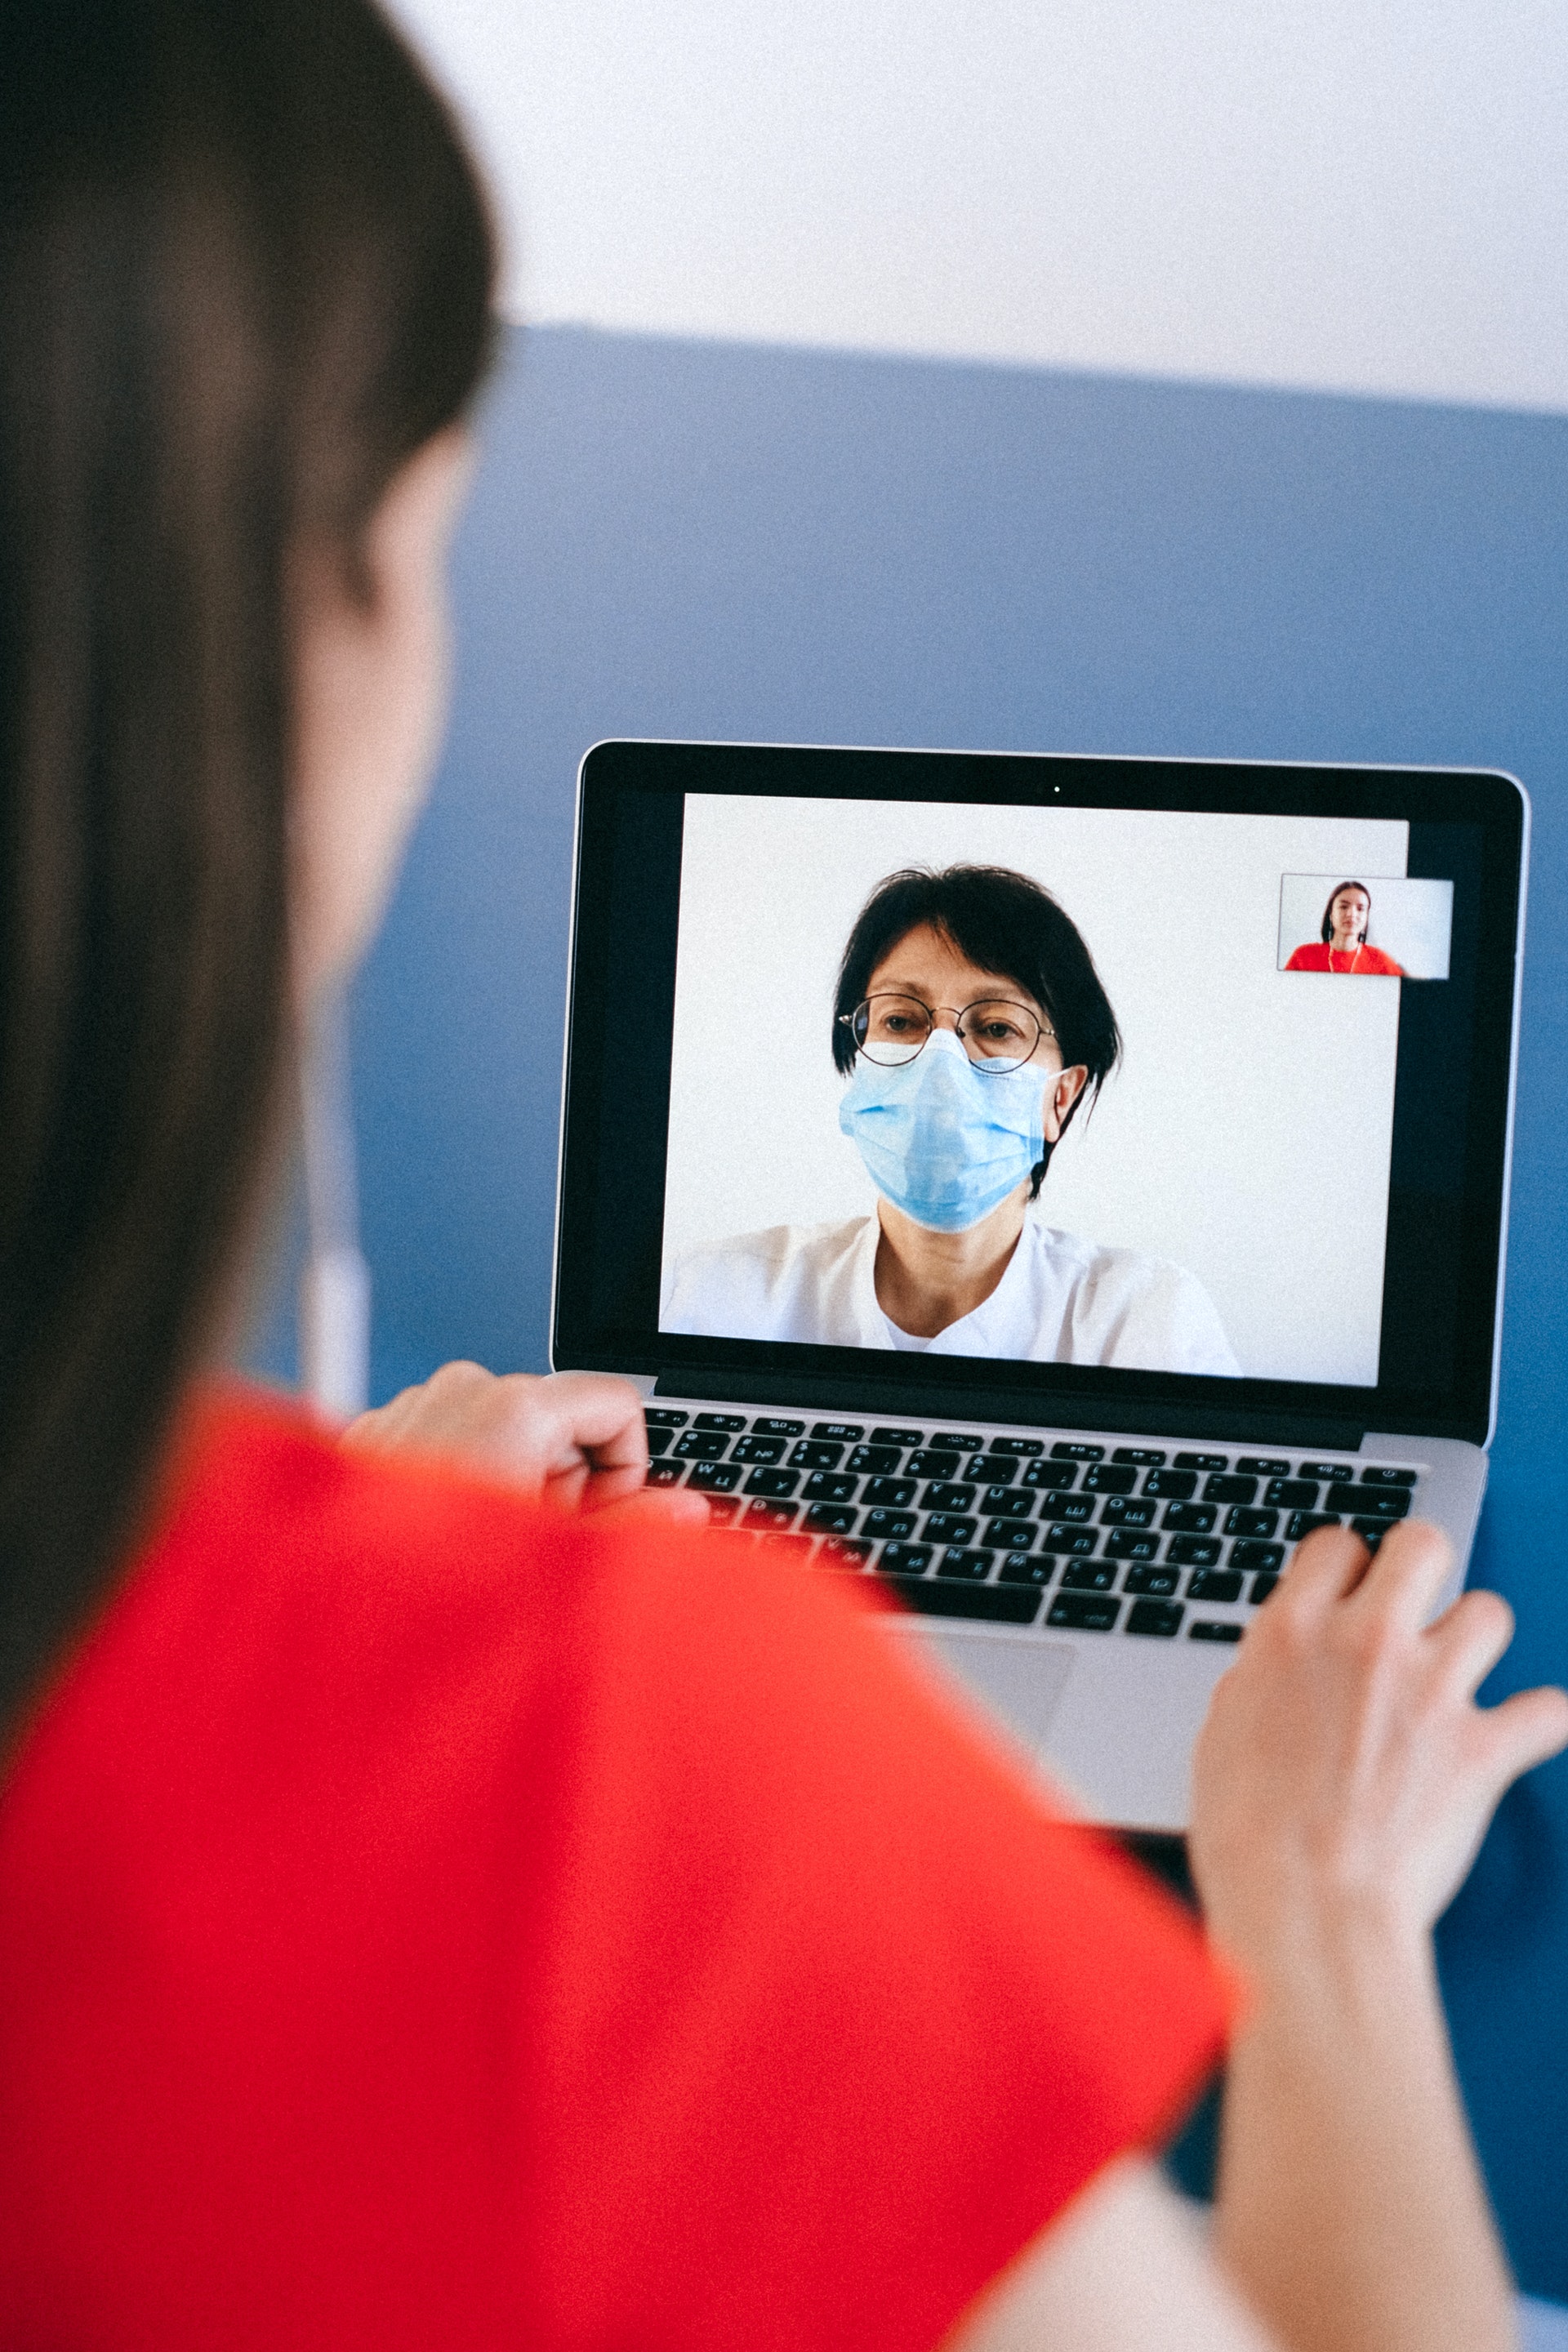 Can You Become A Nurse Through An Online College